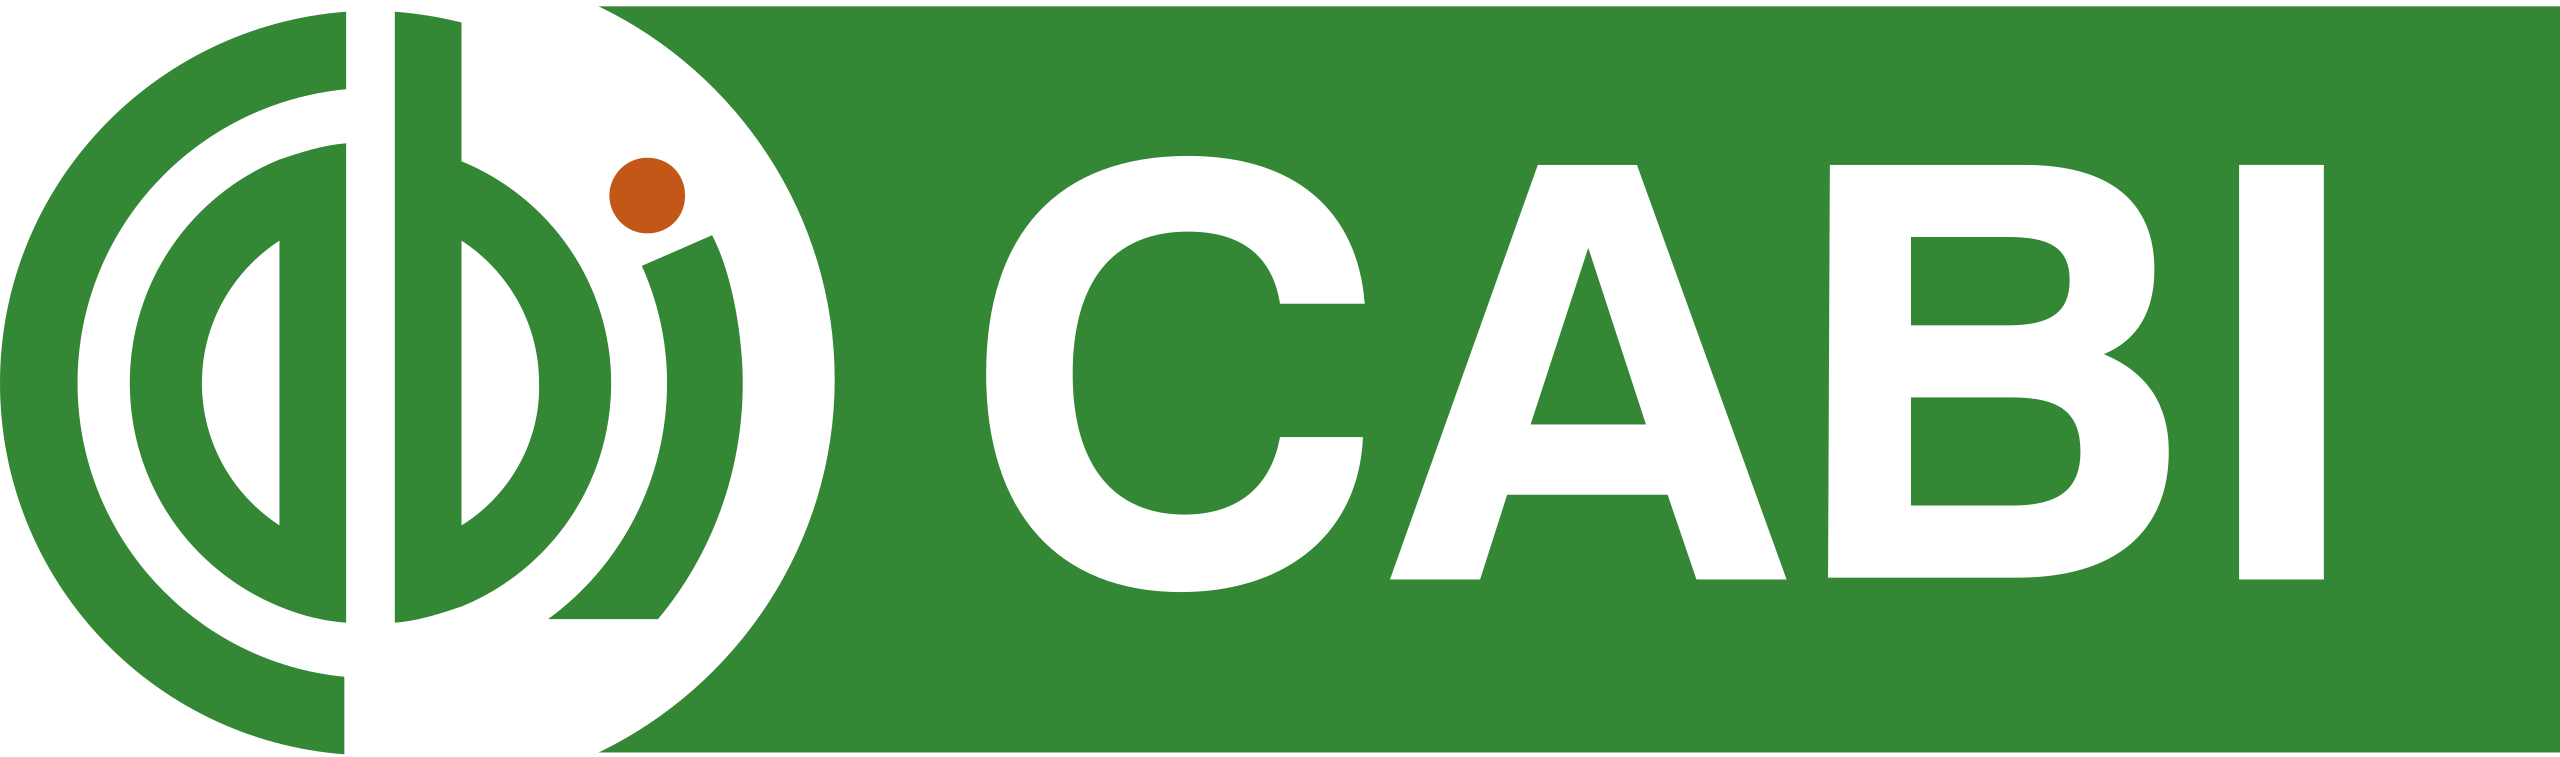 CABI logo